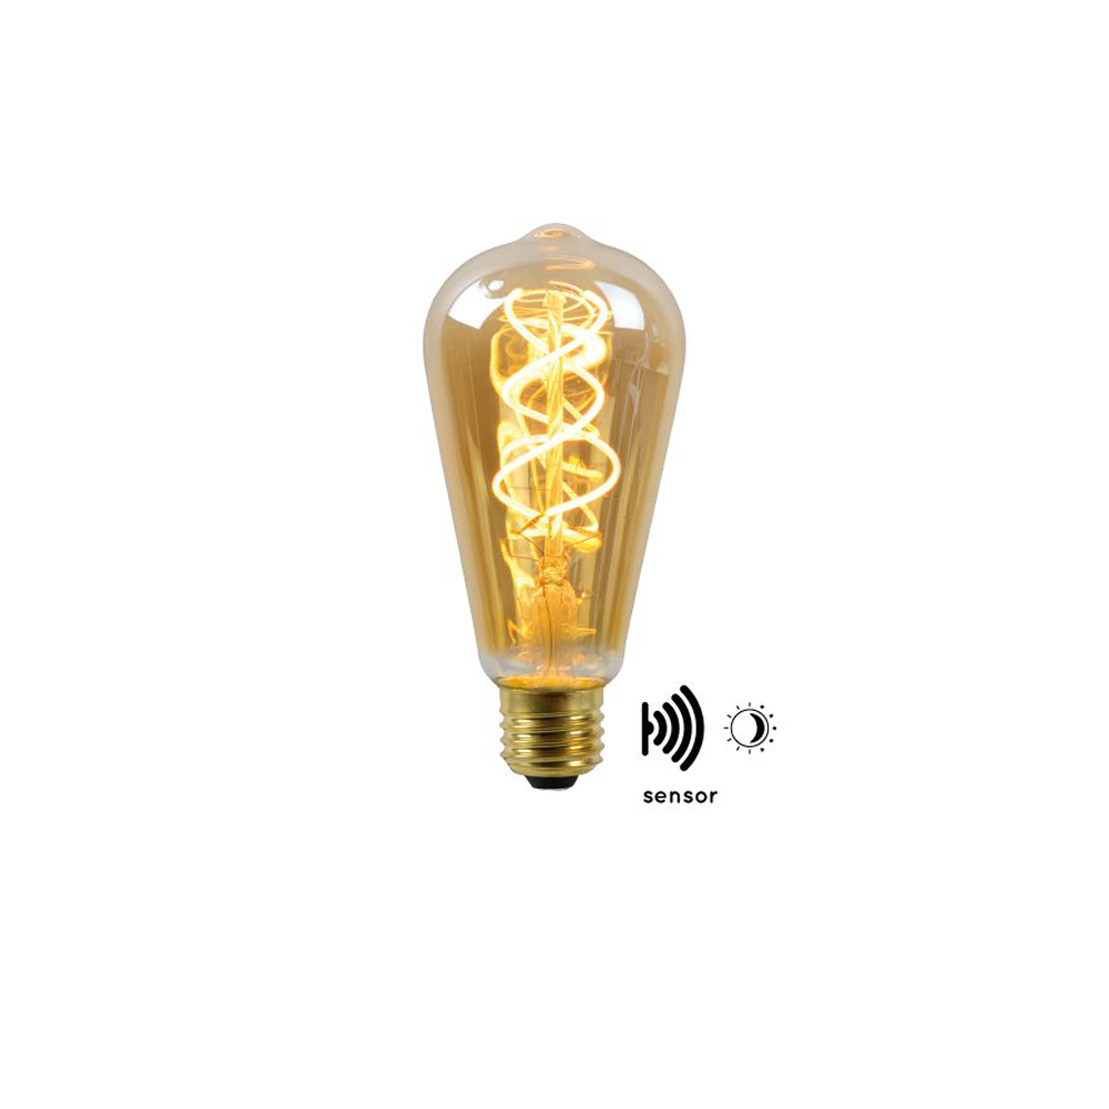 Lucide LED BULB TWILIGHT SENSOR -UlkoFilamentBulb - Ø 6,4 cm - LED - E27 - 1x4W 2200K - Amber